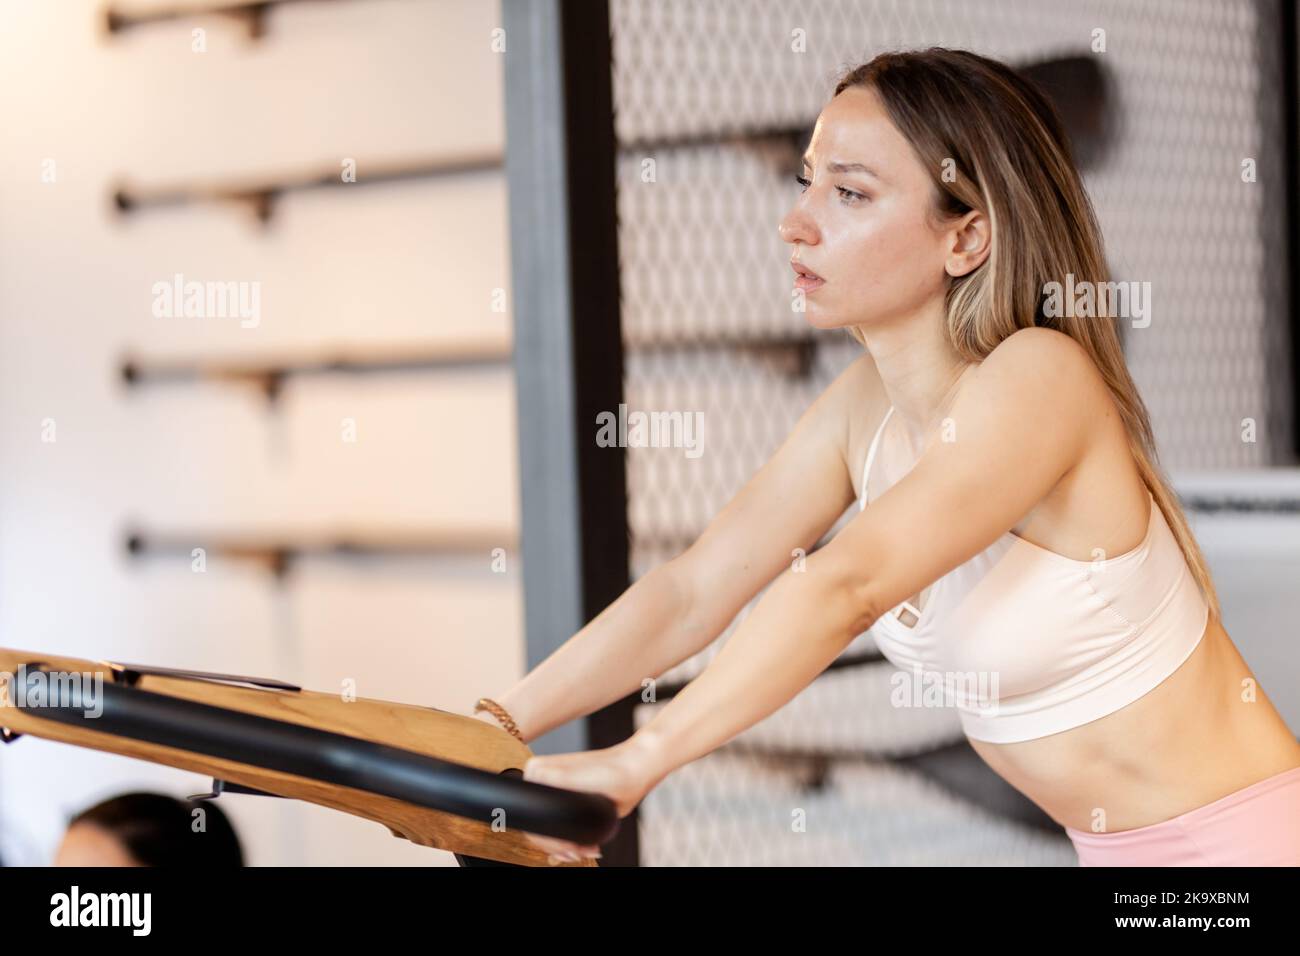 Girl exercising in on stationary bike. Fancy fitness cardio training equipment in modenr fitness center. Stock Photo